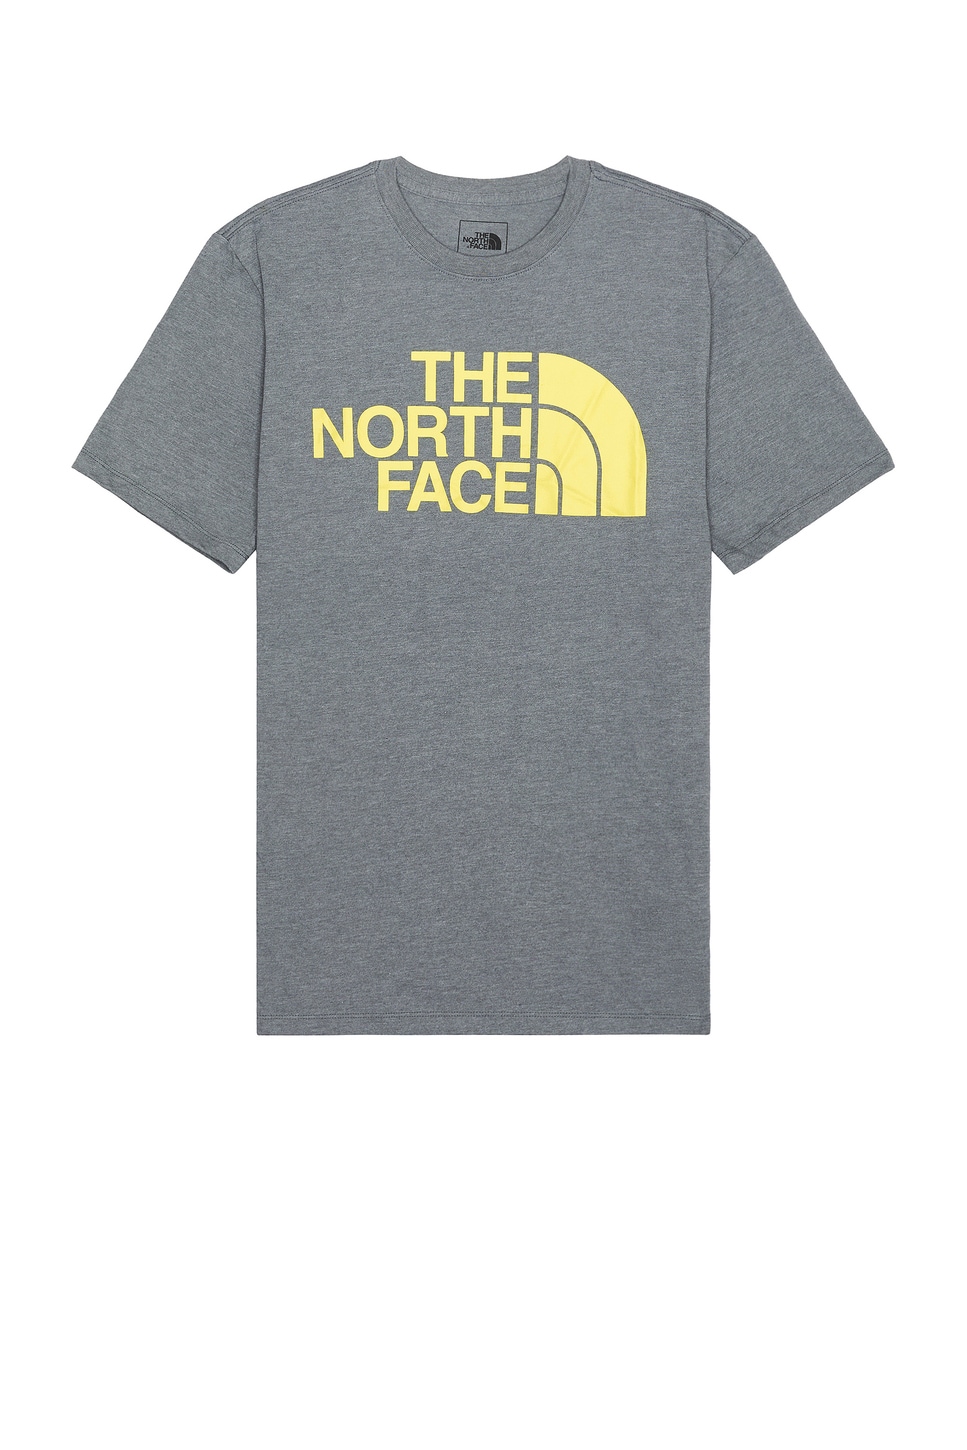 The North Face Short-Sleeve Half Dome Cotton Tee - Women's TNF Light Grey Heather Medium